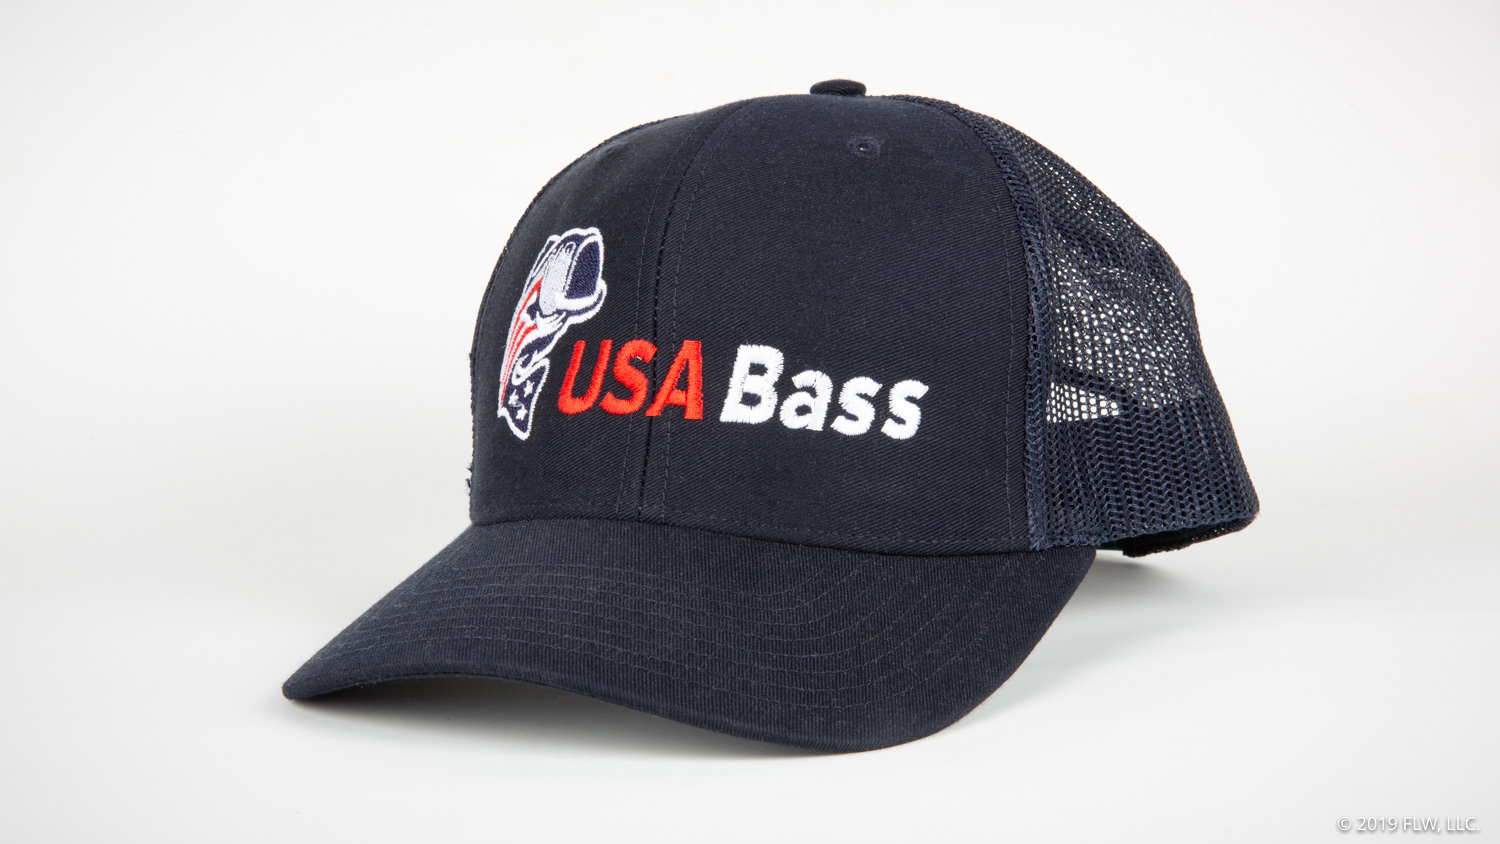 Buy a Hat, Help USA Bass - Major League Fishing